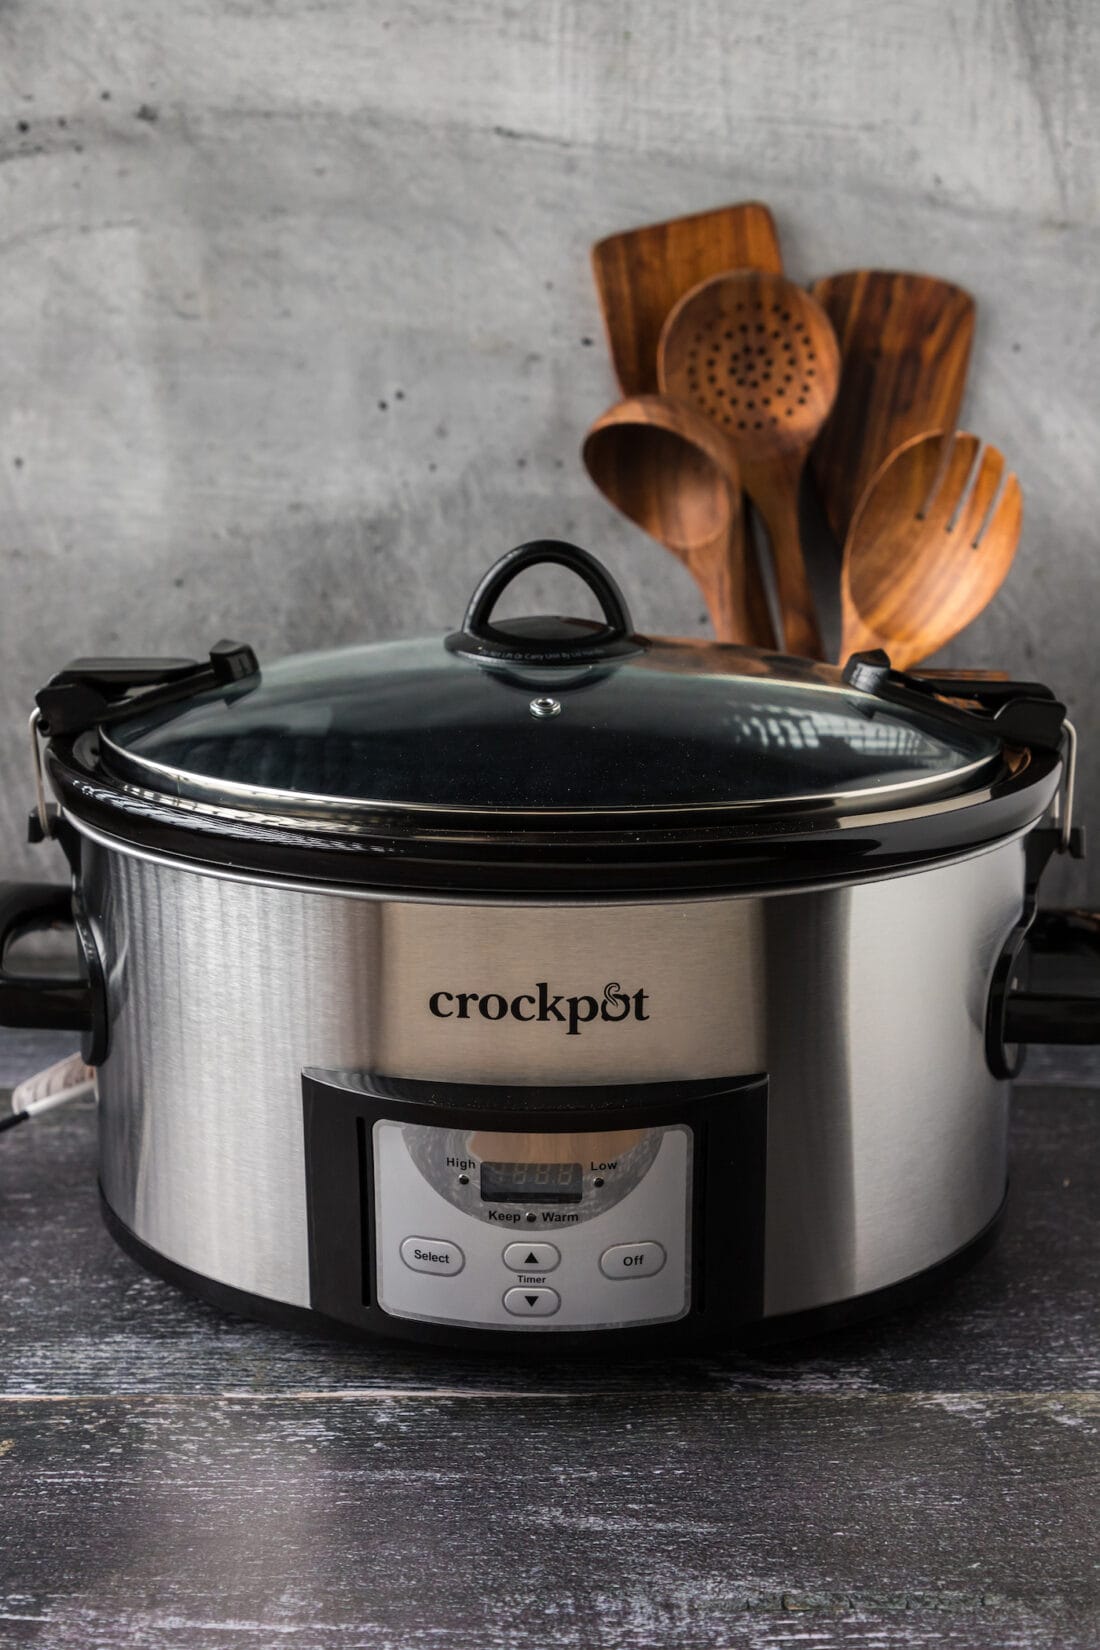 Casserole Slow Cooker 101 - Recipes That Crock!